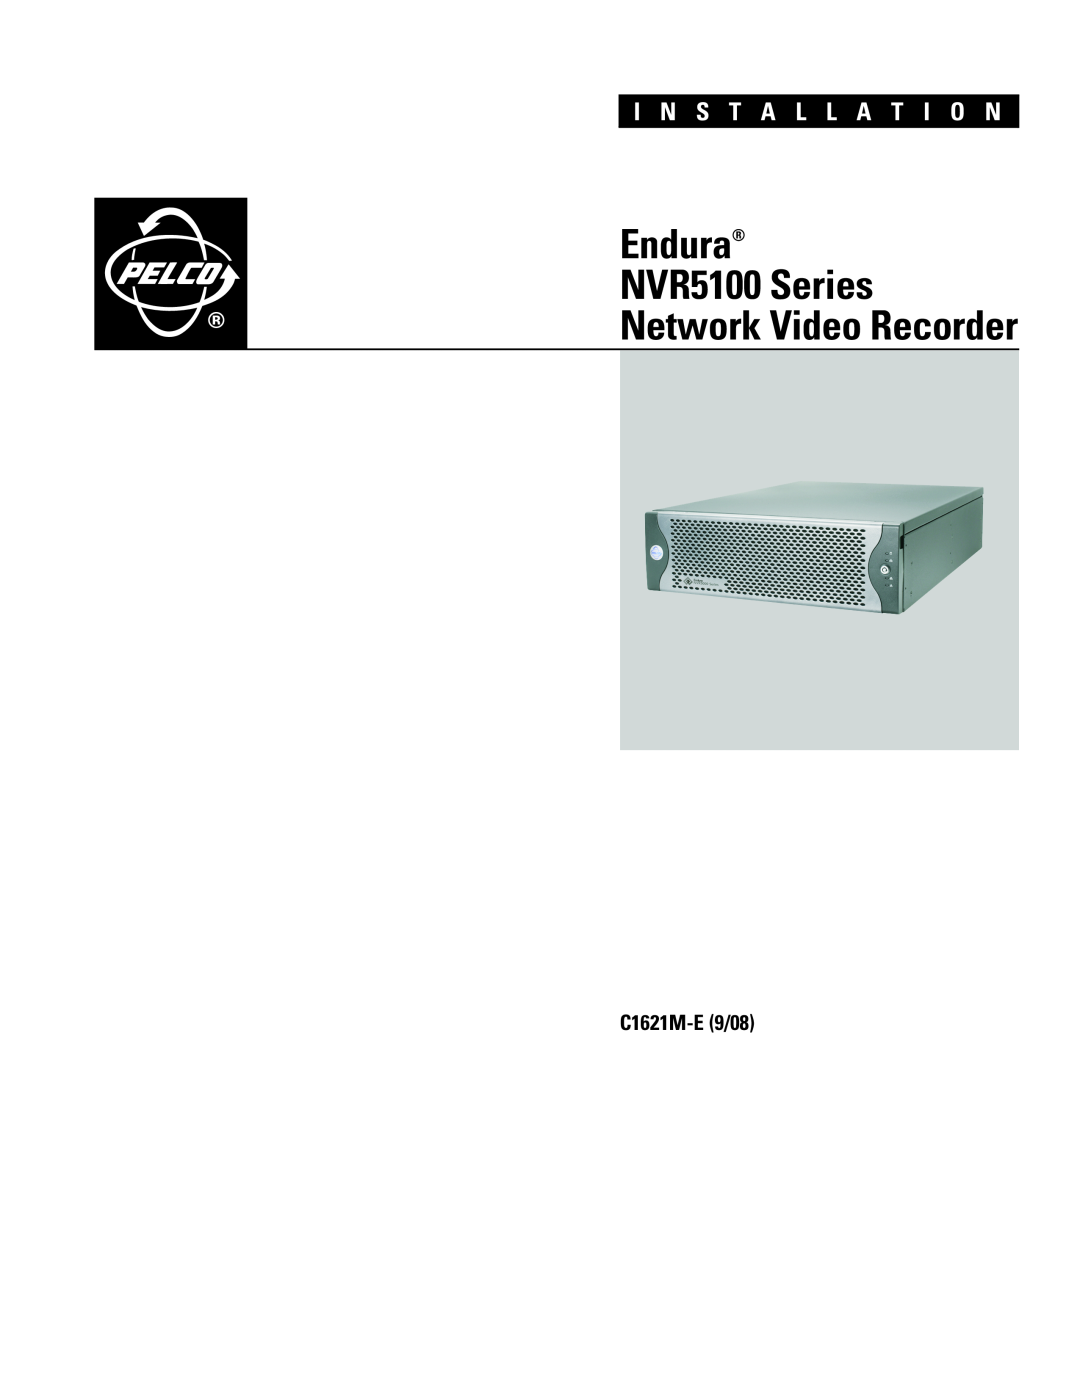 Pelco C1621M-E (9/08) 3 manual C1621M-E9/08, Endura NVR5100 Series, Network Video Recorder, I N S T A L L A T I O N 